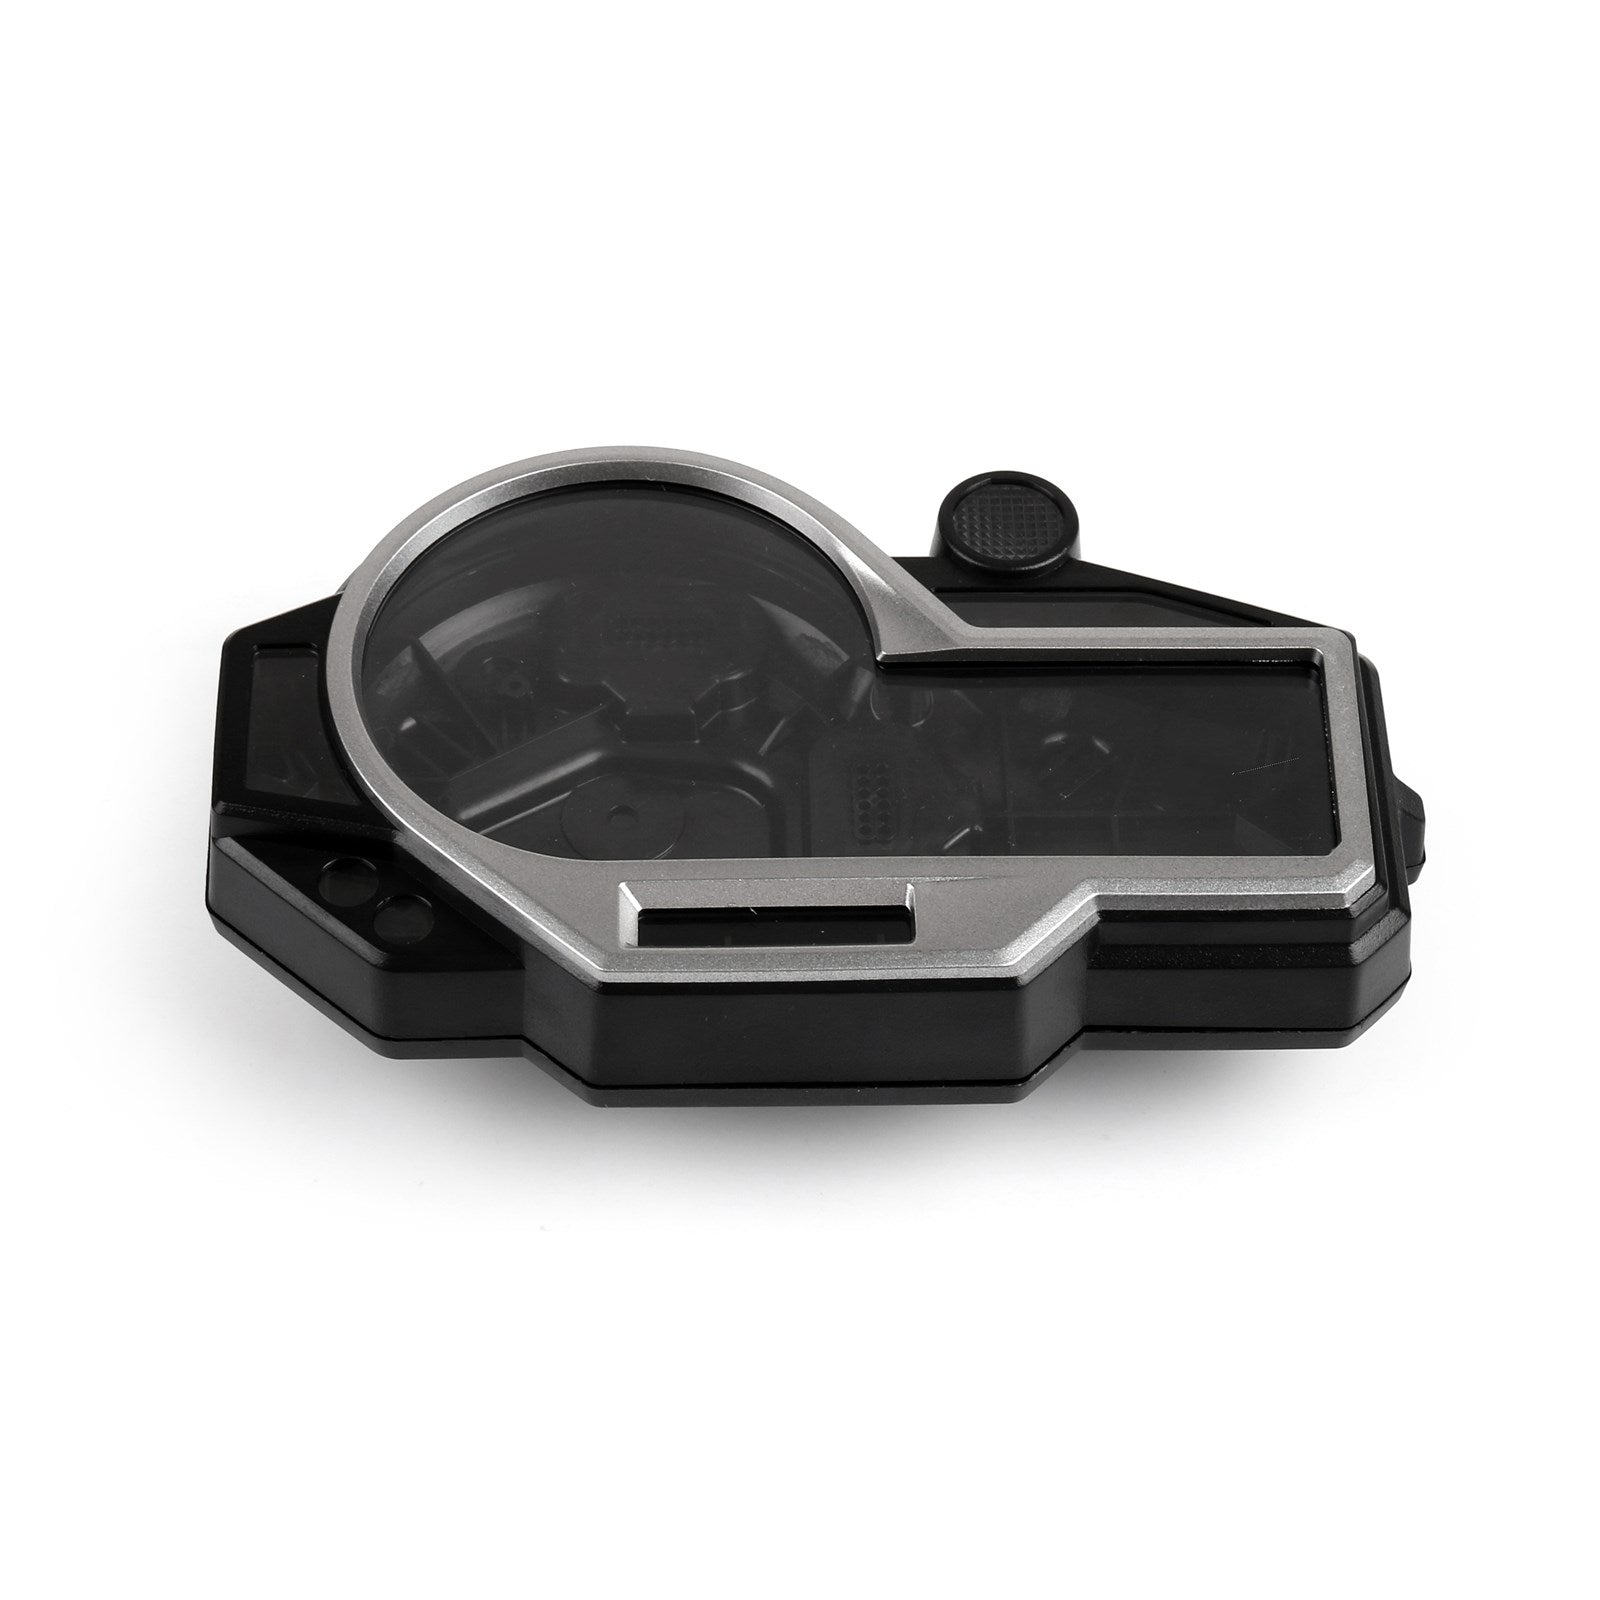 Plasti Speedometer Gauge Instrument Hull Housing Cover Fit for BMW S1000RR 2015